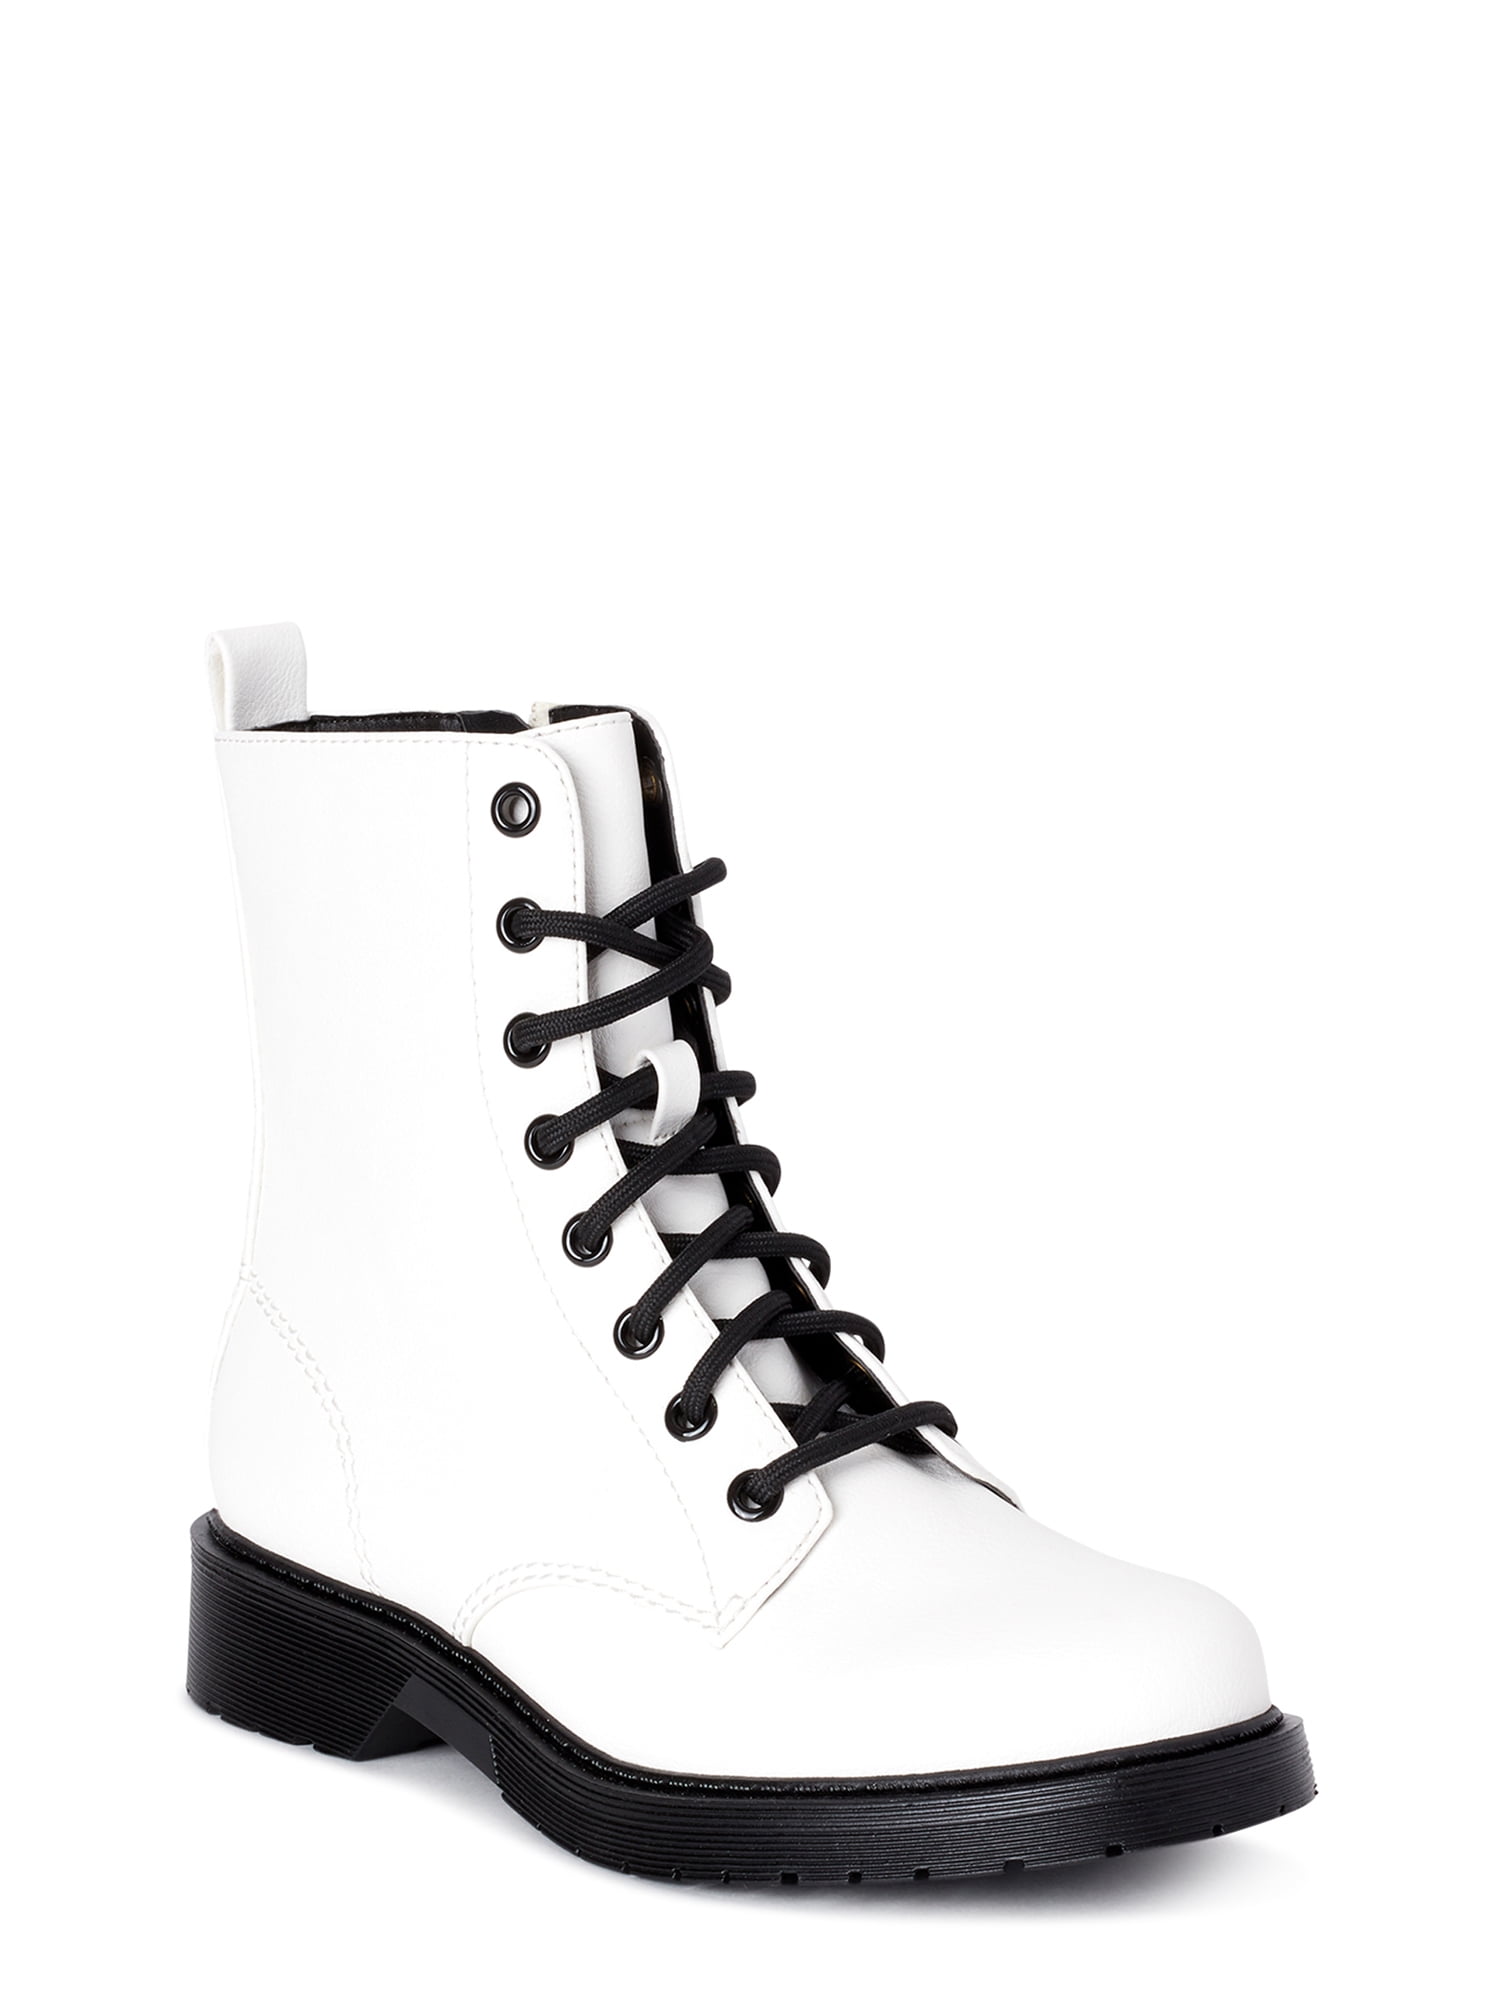 walmart shoe boots